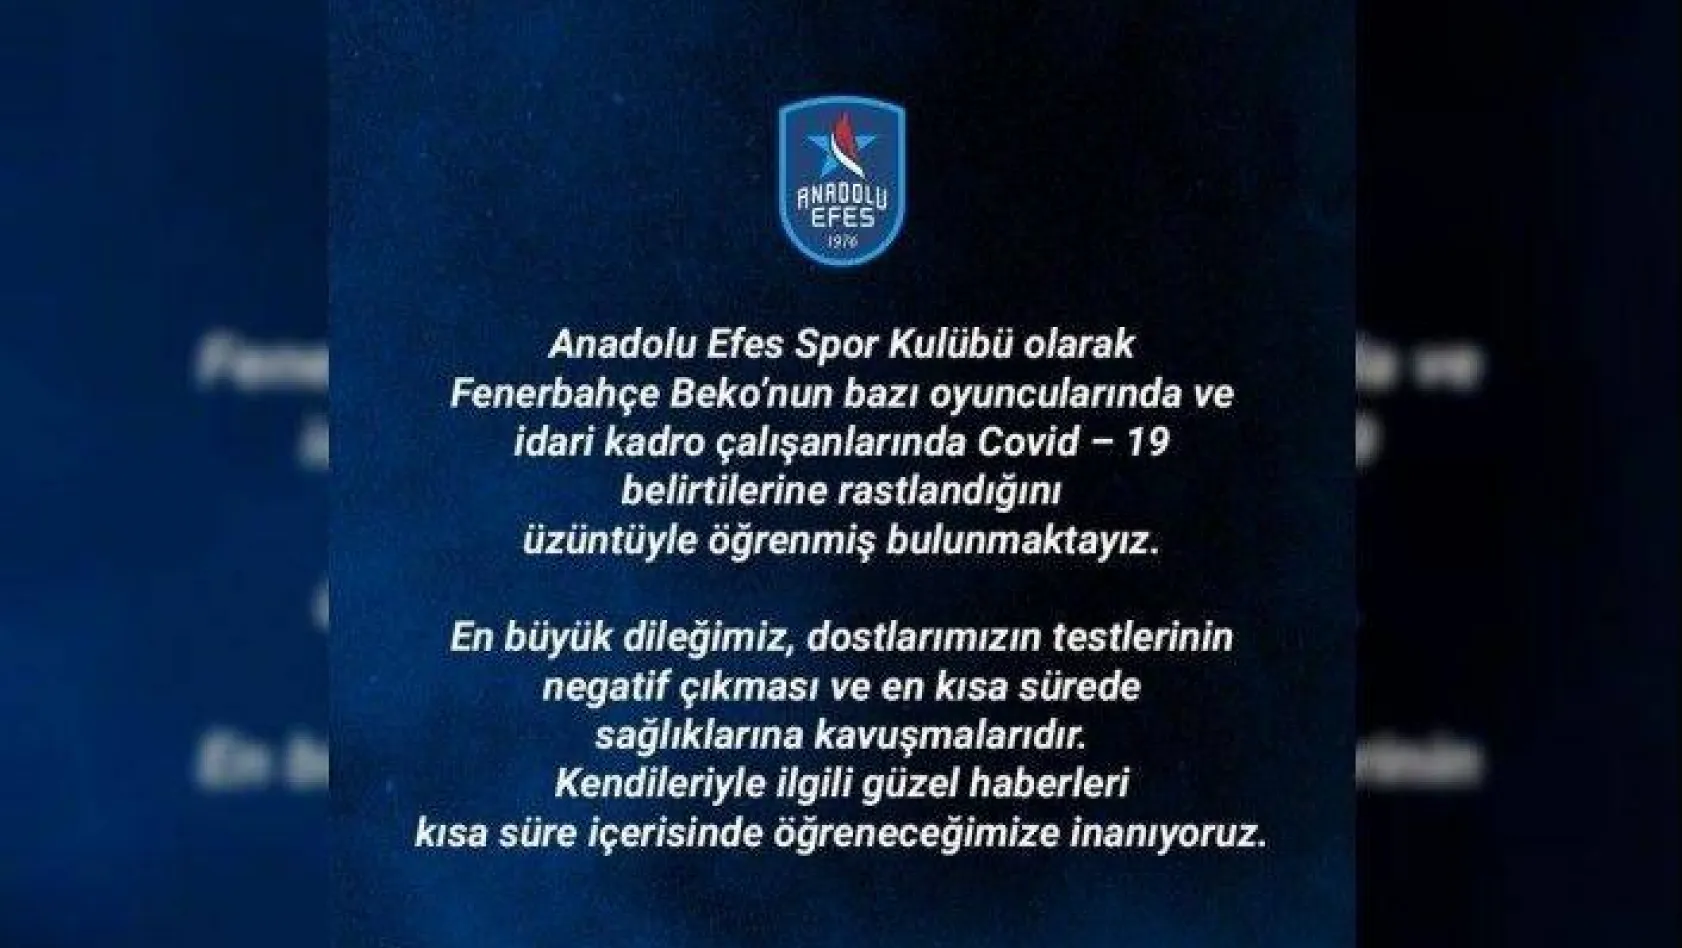 Anadolu Efes'ten Fenerbahçe'ye geçmiş olsun mesajı